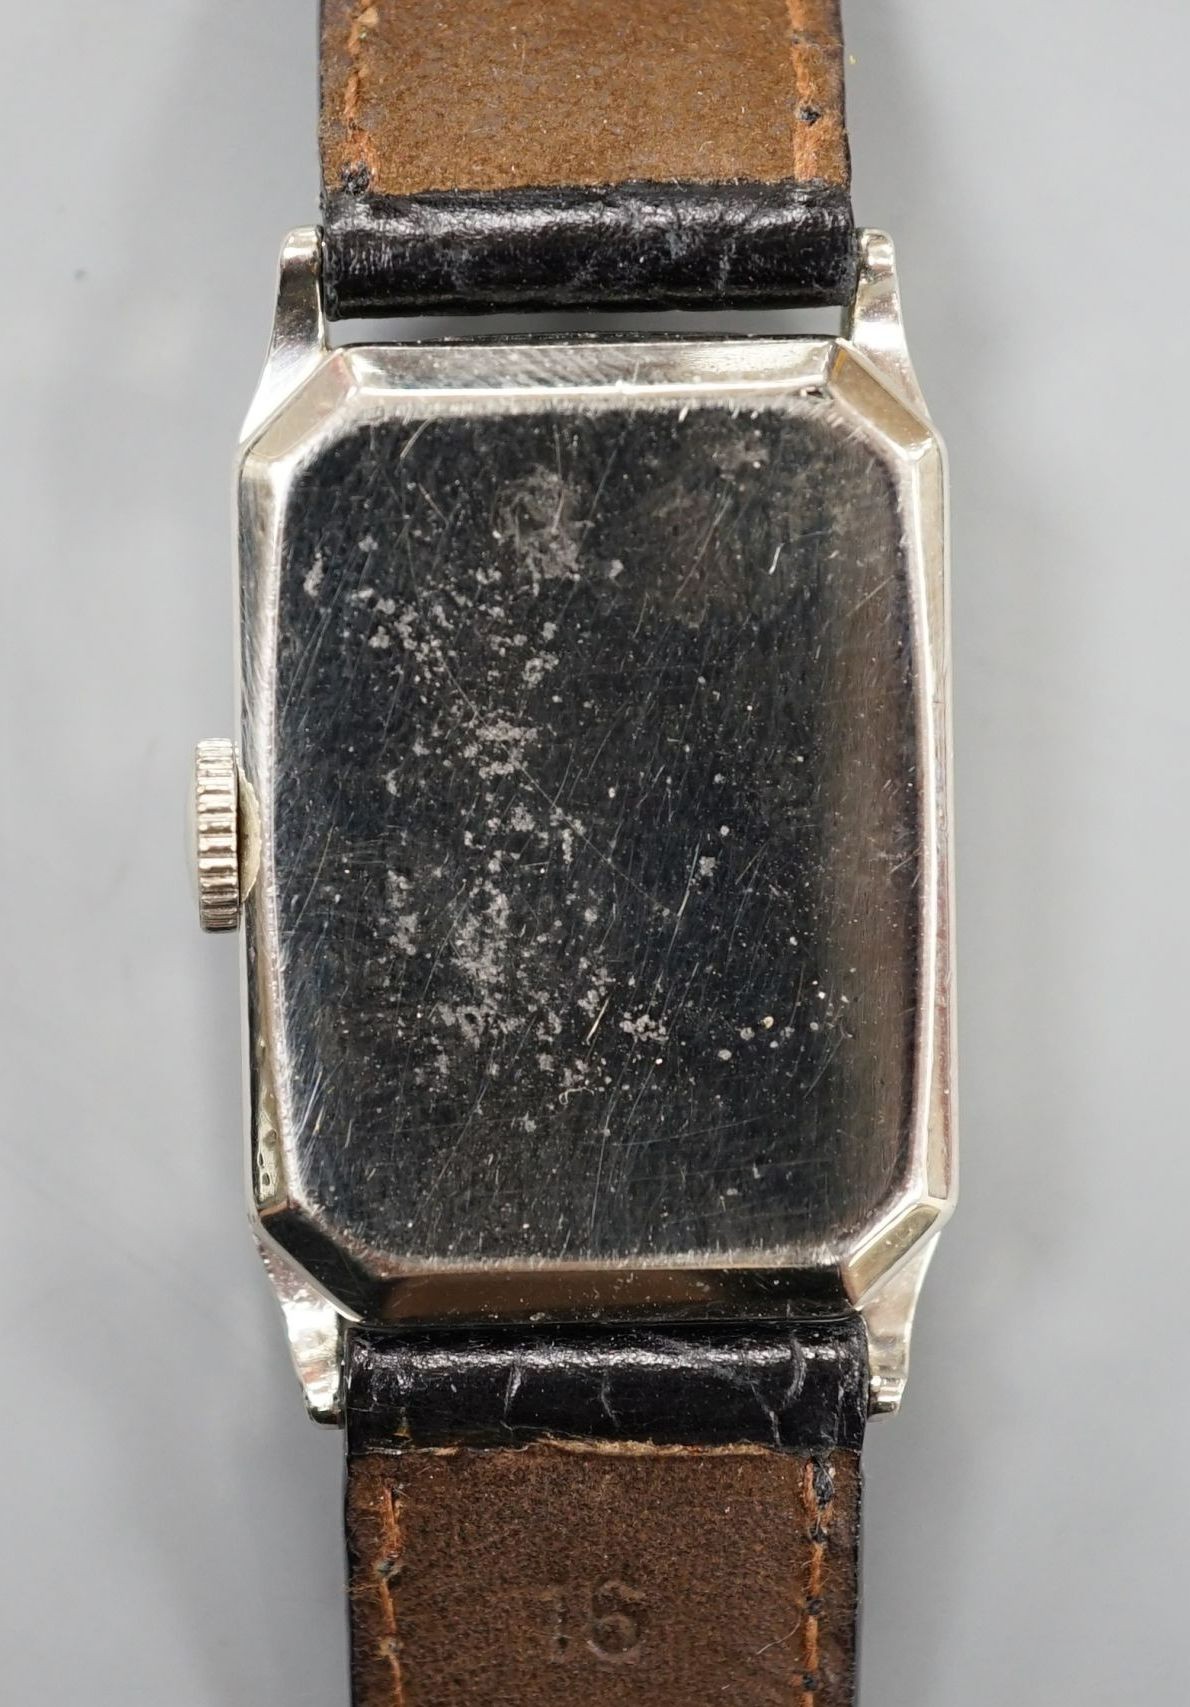 A gentleman's 14k gold filled Gruen manual wind wrist watch, on a leather strap.